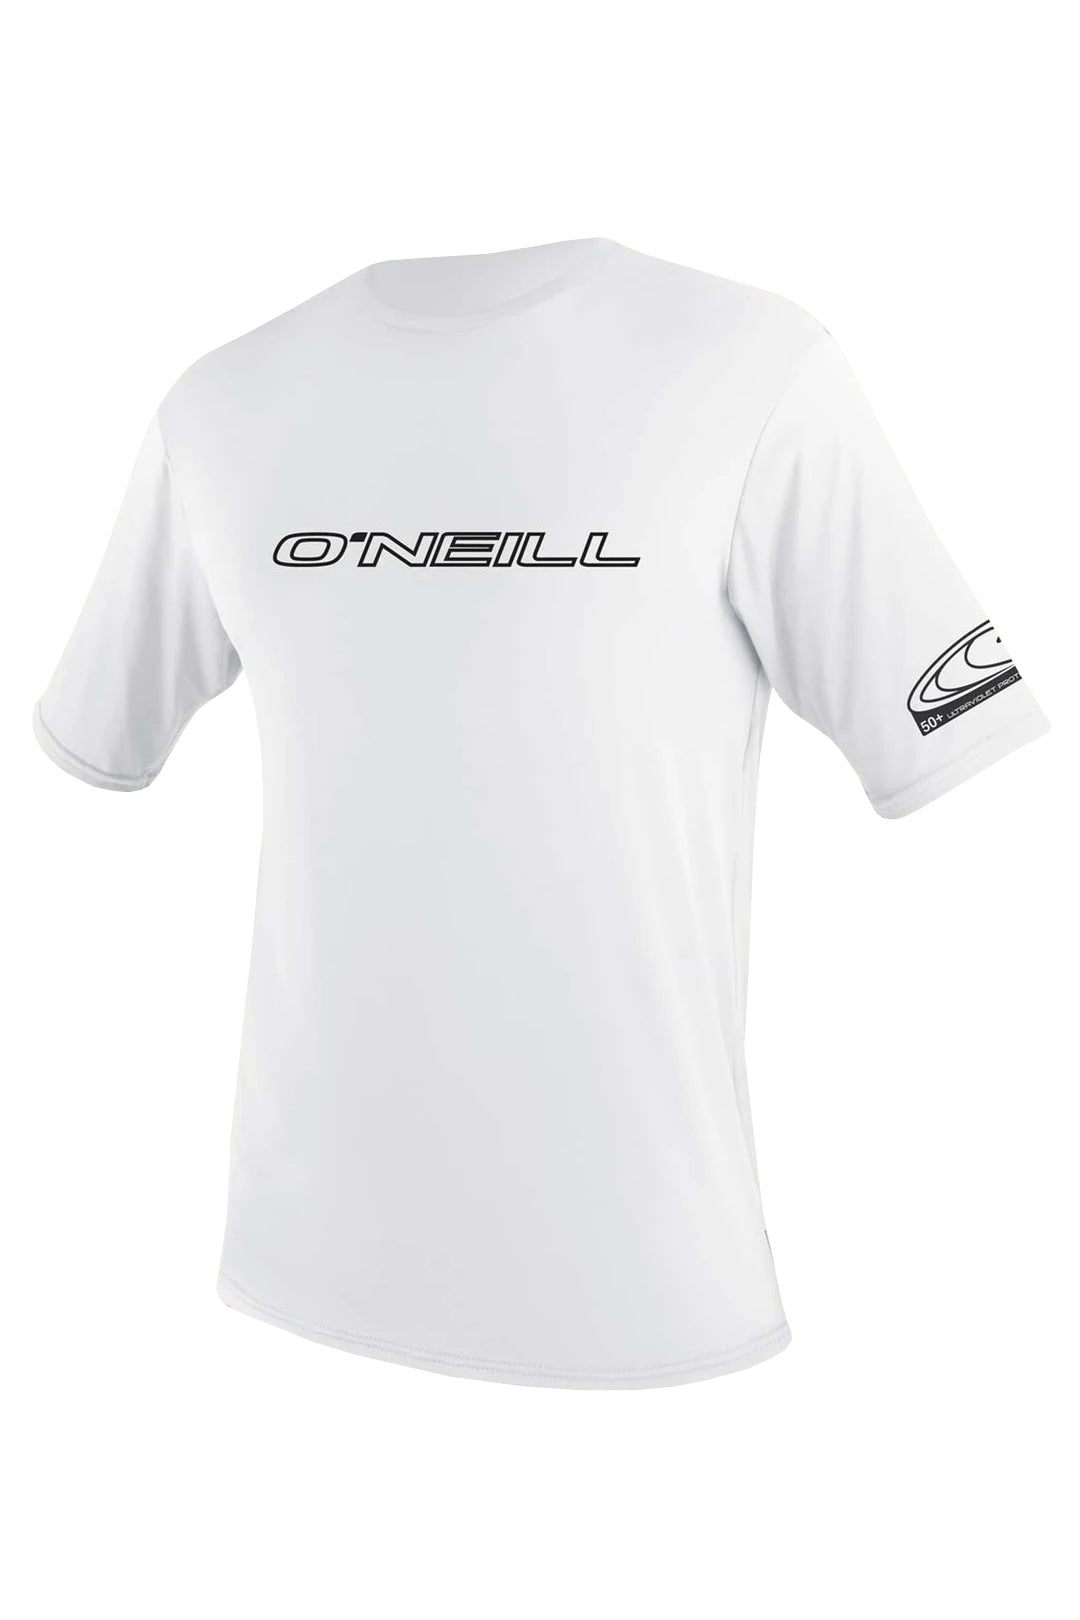 O'Neill Youth Basic Skins 50 SS Sun Shirt 009-Graphite 12